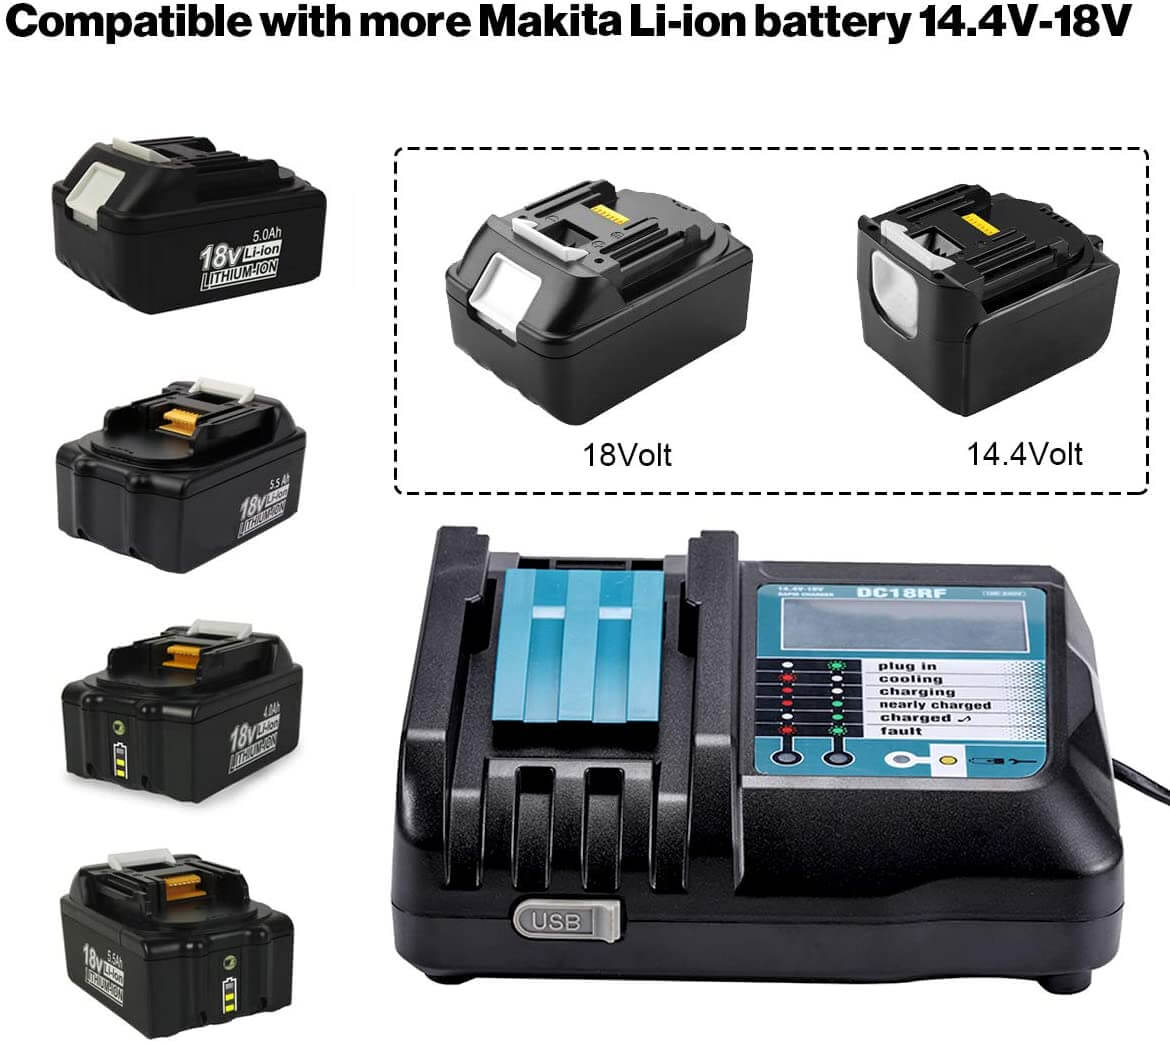 2BL1860B+DC18RF 3.5A Li-Ion Ersatz Ladegerät für Makita 14.4V-18V akku Ladegeräte - Dasbatteries